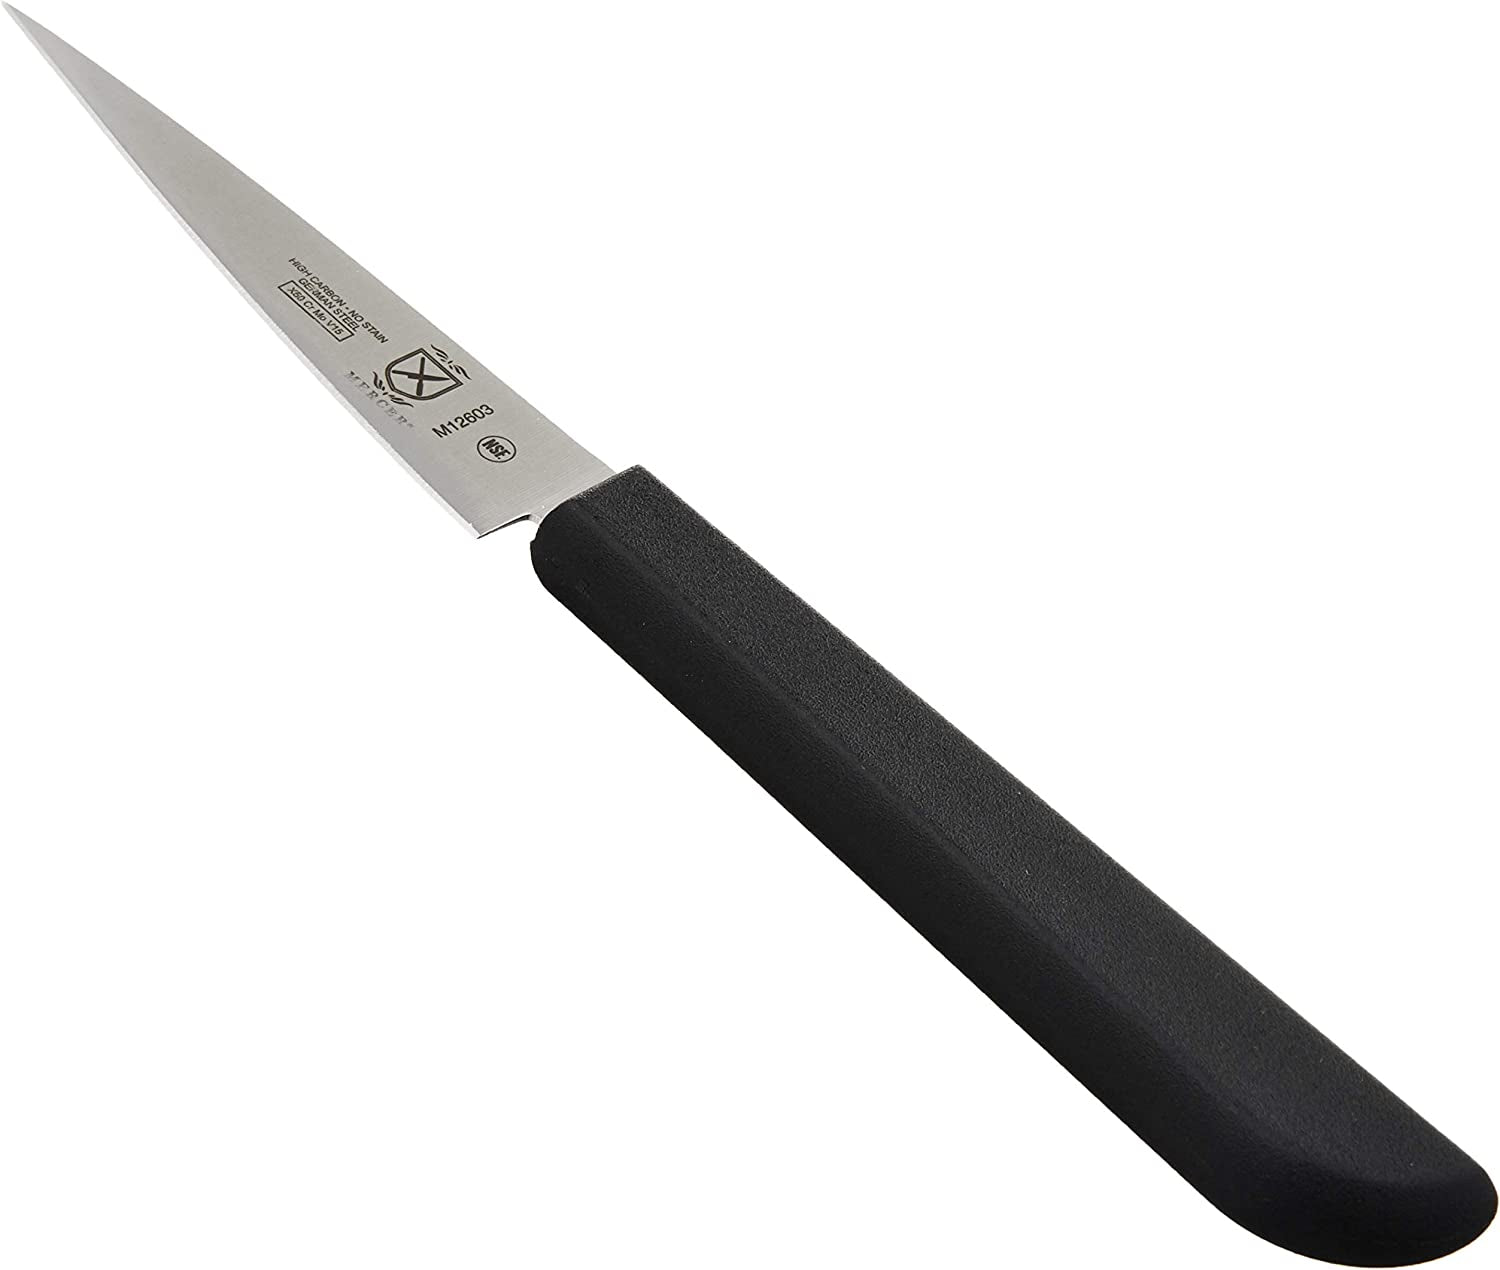 Thai Carving Knife, 5 Inch, Black